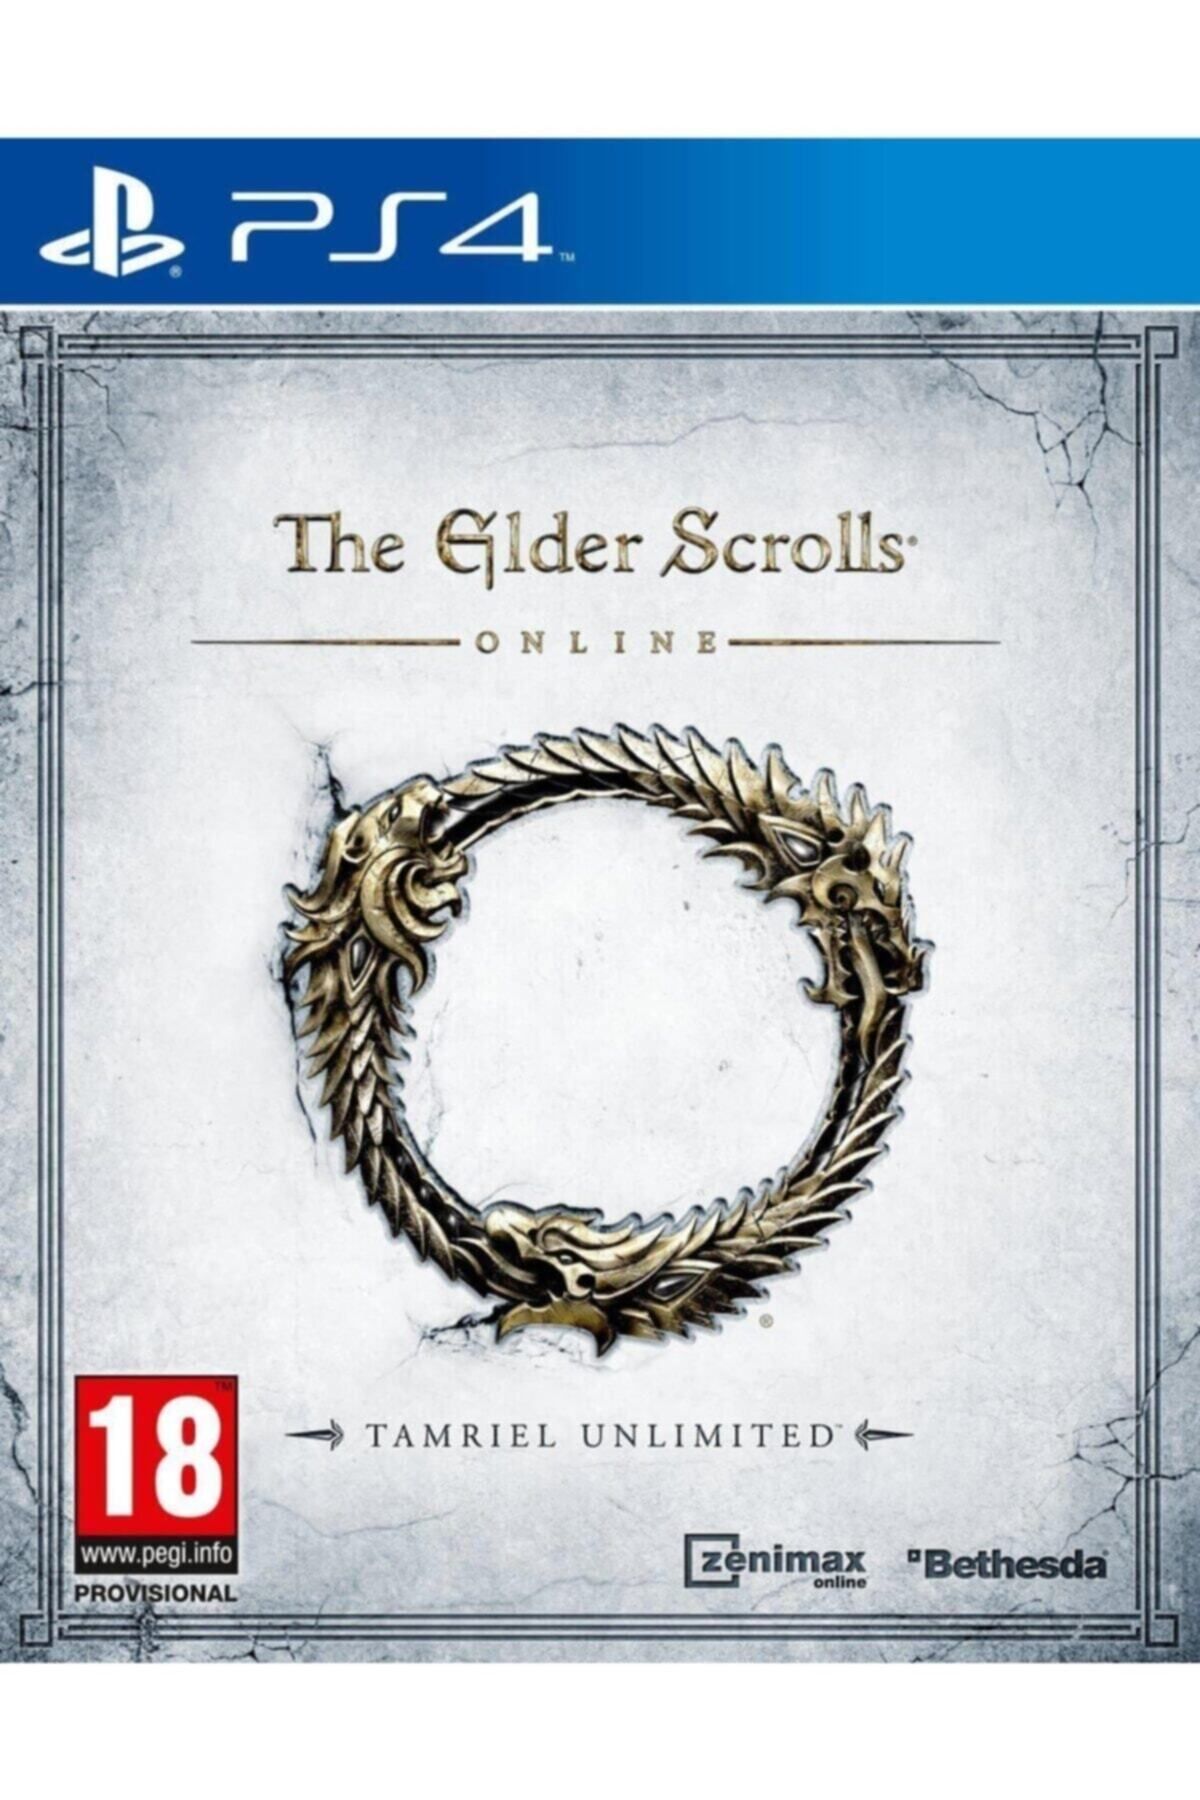 BETHESDA Ps4 The Elder Scrolls Onlıne Tamrıel Unlımıted